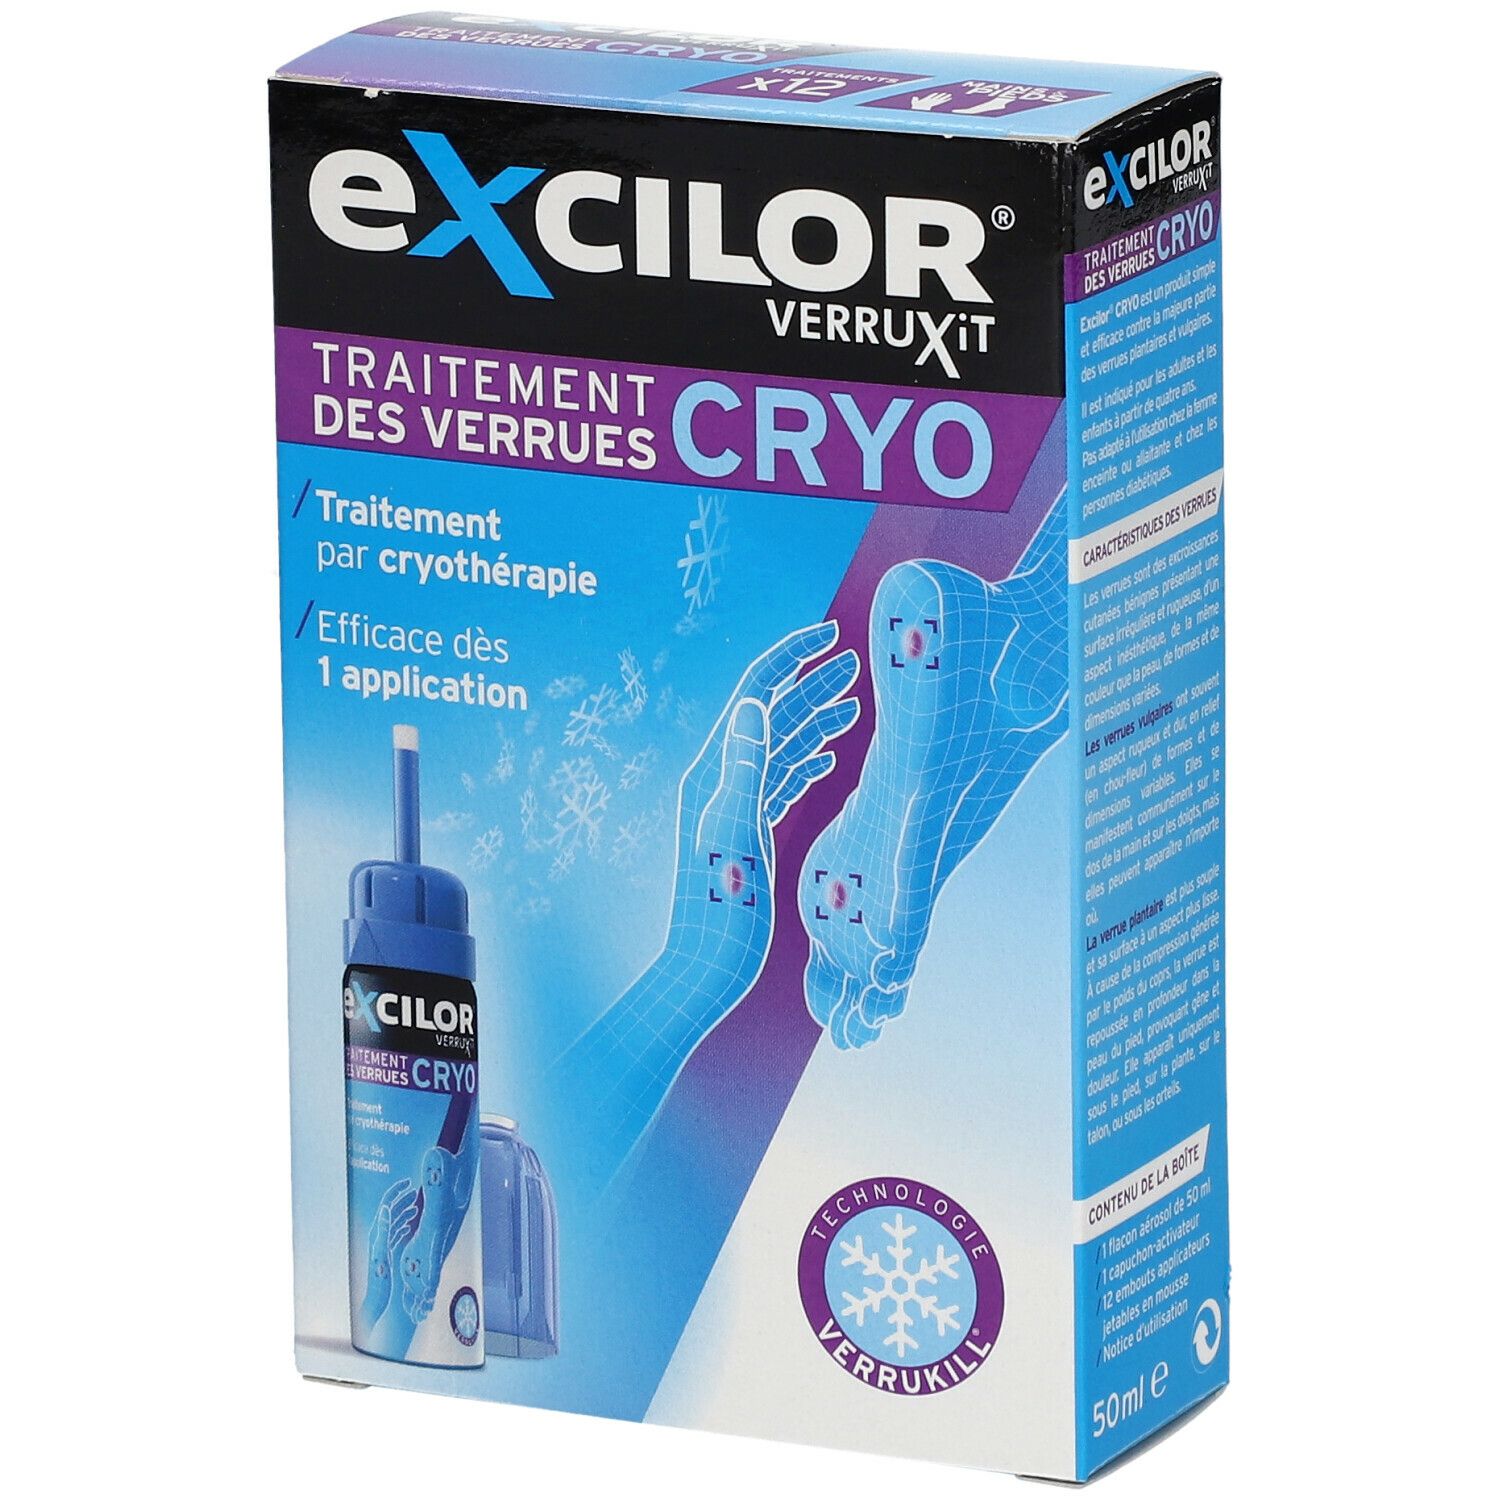 eXcilor® Verruxit Traitement des Verrues Cryo